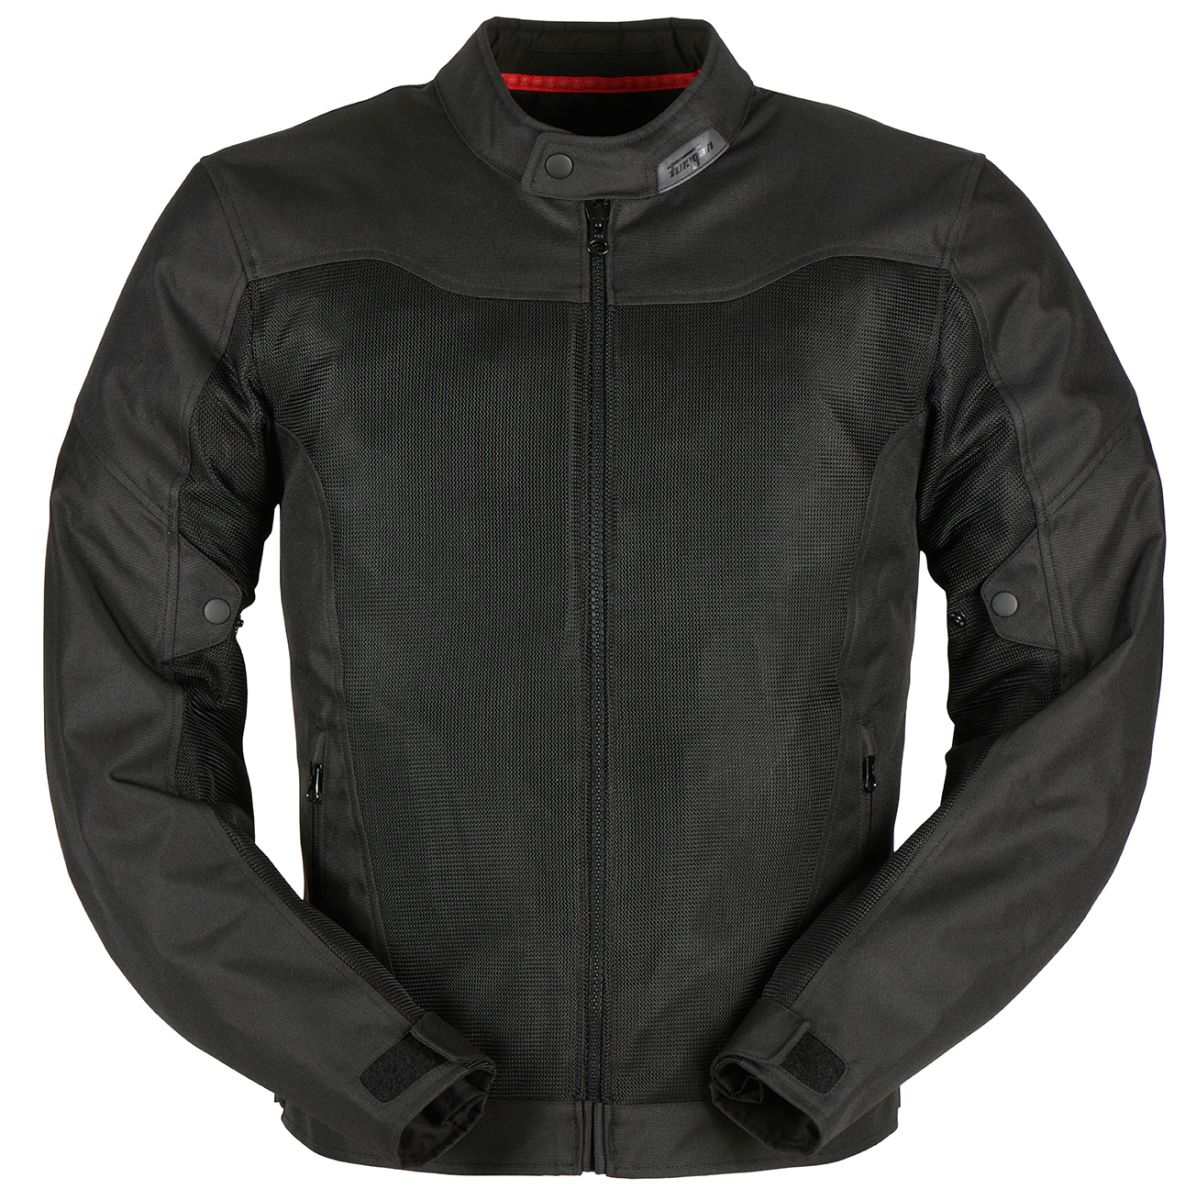 Image of Furygan Mistral 3 Evo Jacket Black Size 2XL ID 3435980342050